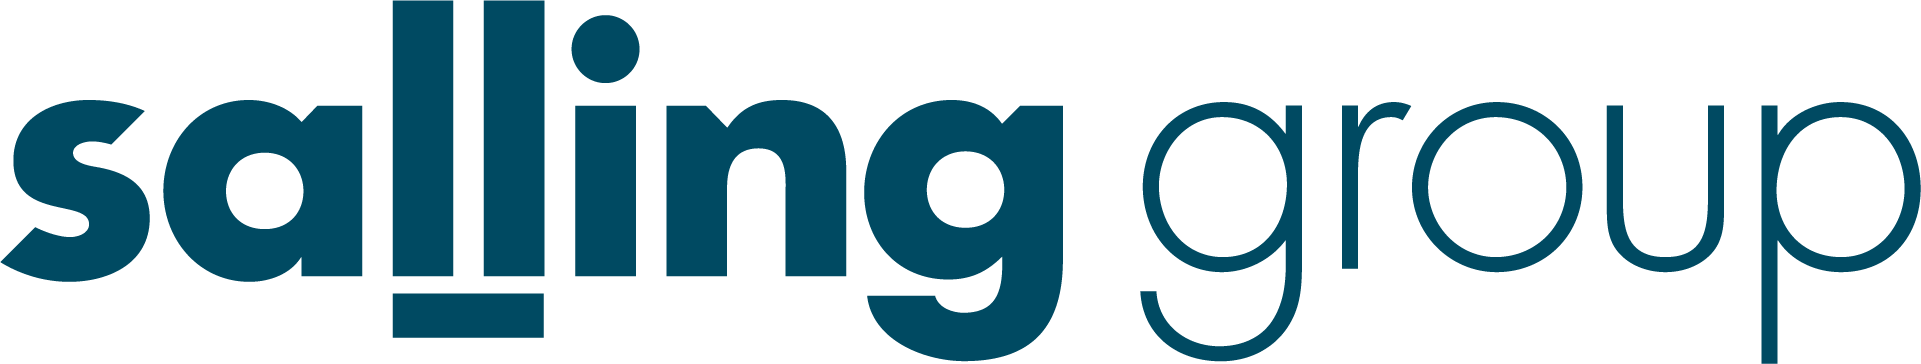 Sallings logo